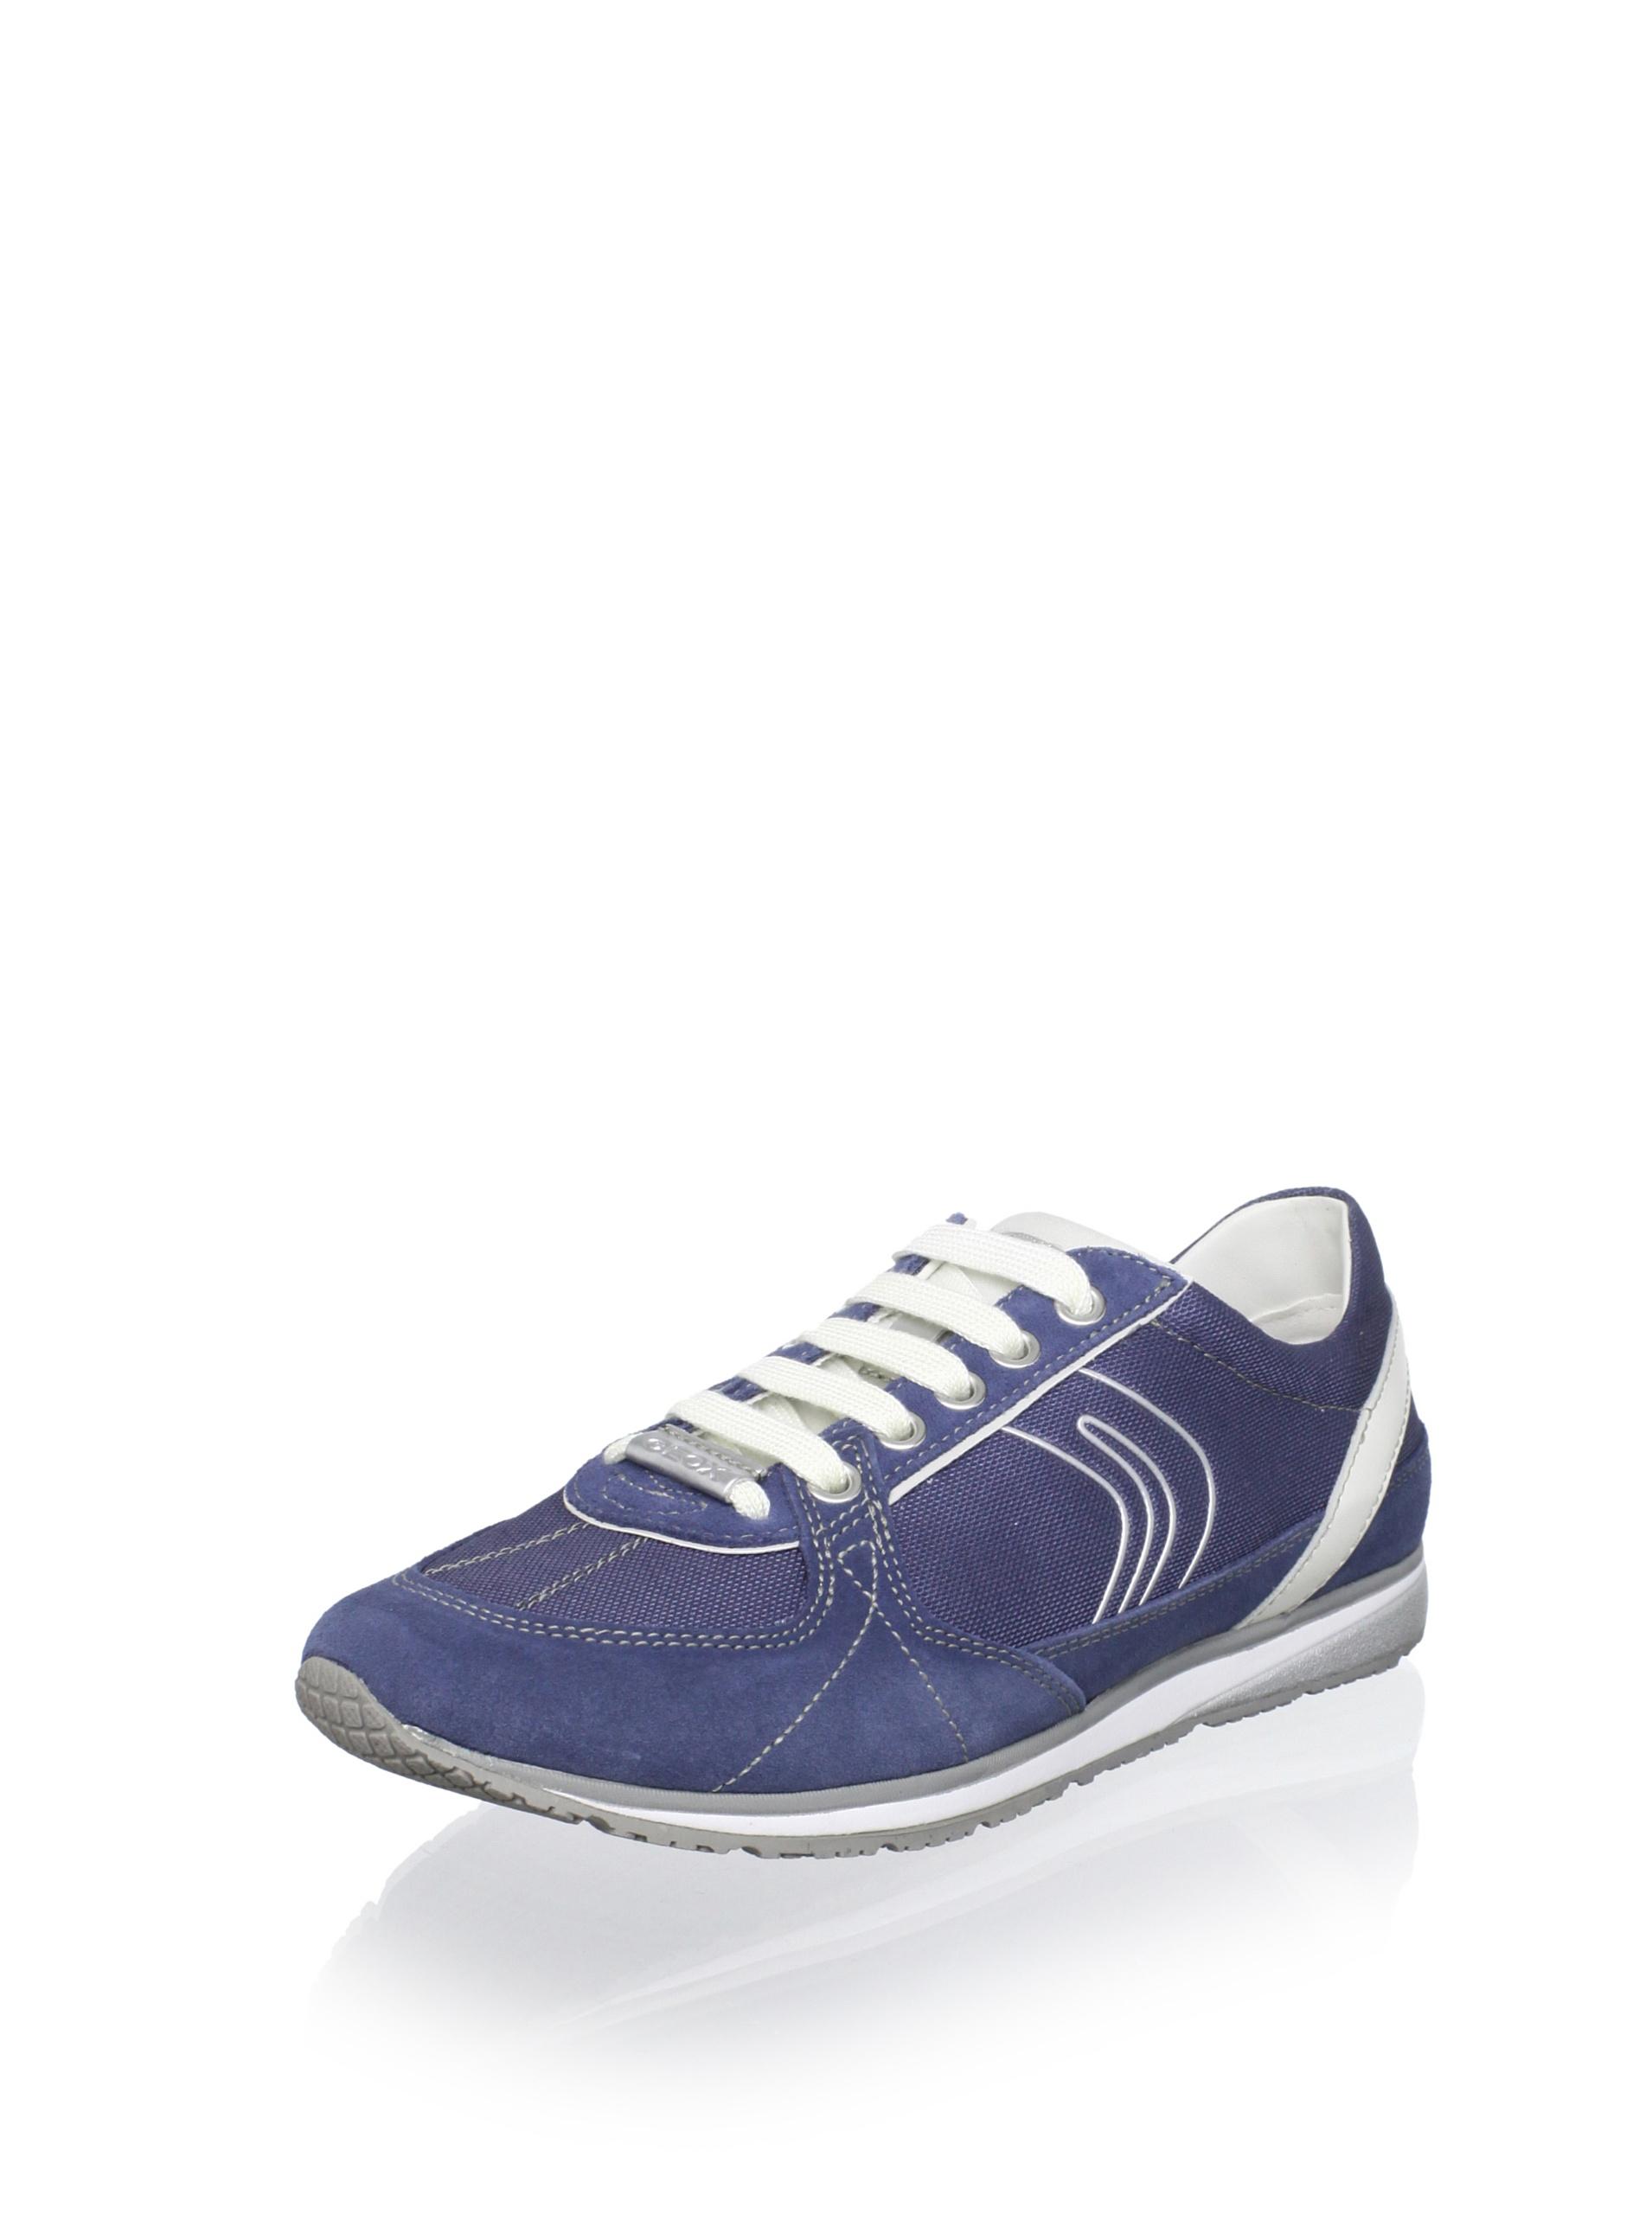 Geox Wisdom Fashion Sneaker,blue,35 Eu/35 M Us | Lyst